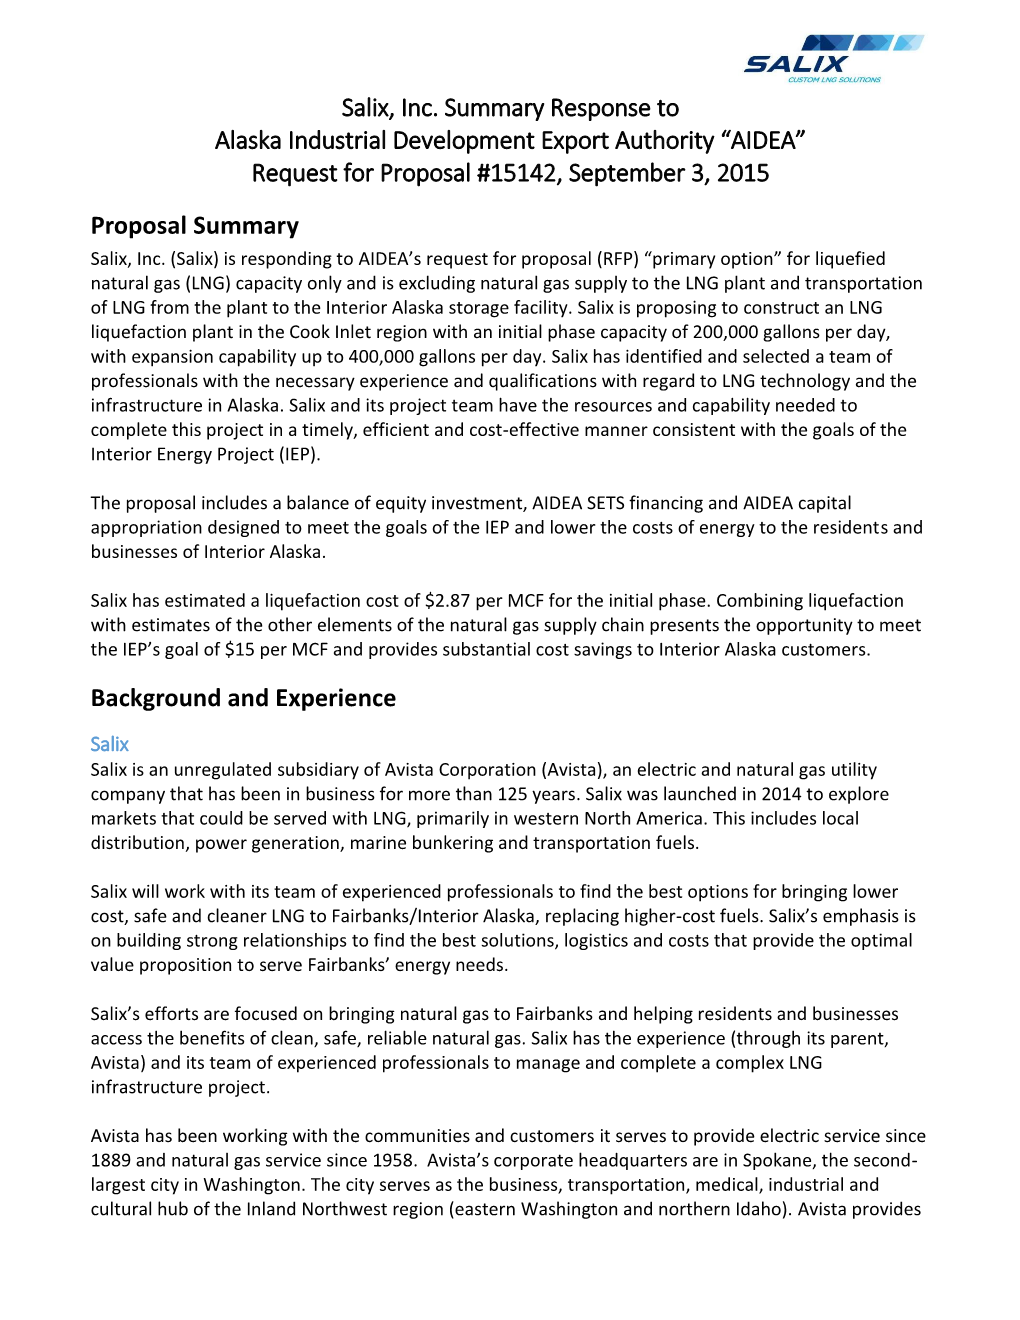 Salix, Inc. Summary Response to Alaska Industrial Development Export Authority “AIDEA” Request for Proposal #15142, September 3, 2015 Proposal Summary Salix, Inc